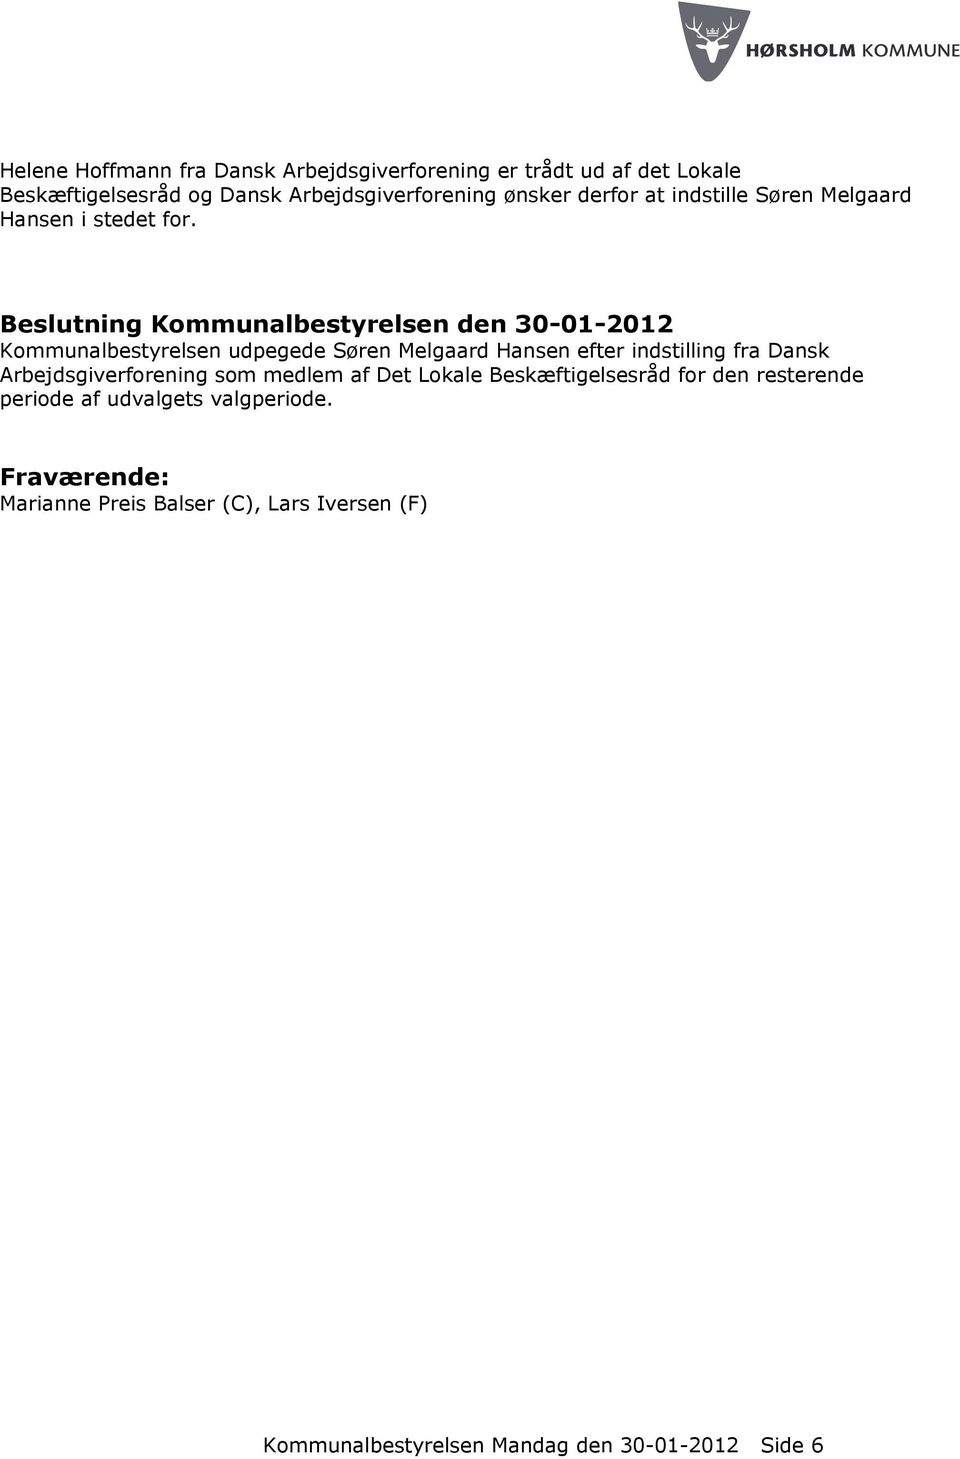 Beslutning Kommunalbestyrelsen den 30-01-2012 Kommunalbestyrelsen udpegede Søren Melgaard Hansen efter indstilling fra Dansk